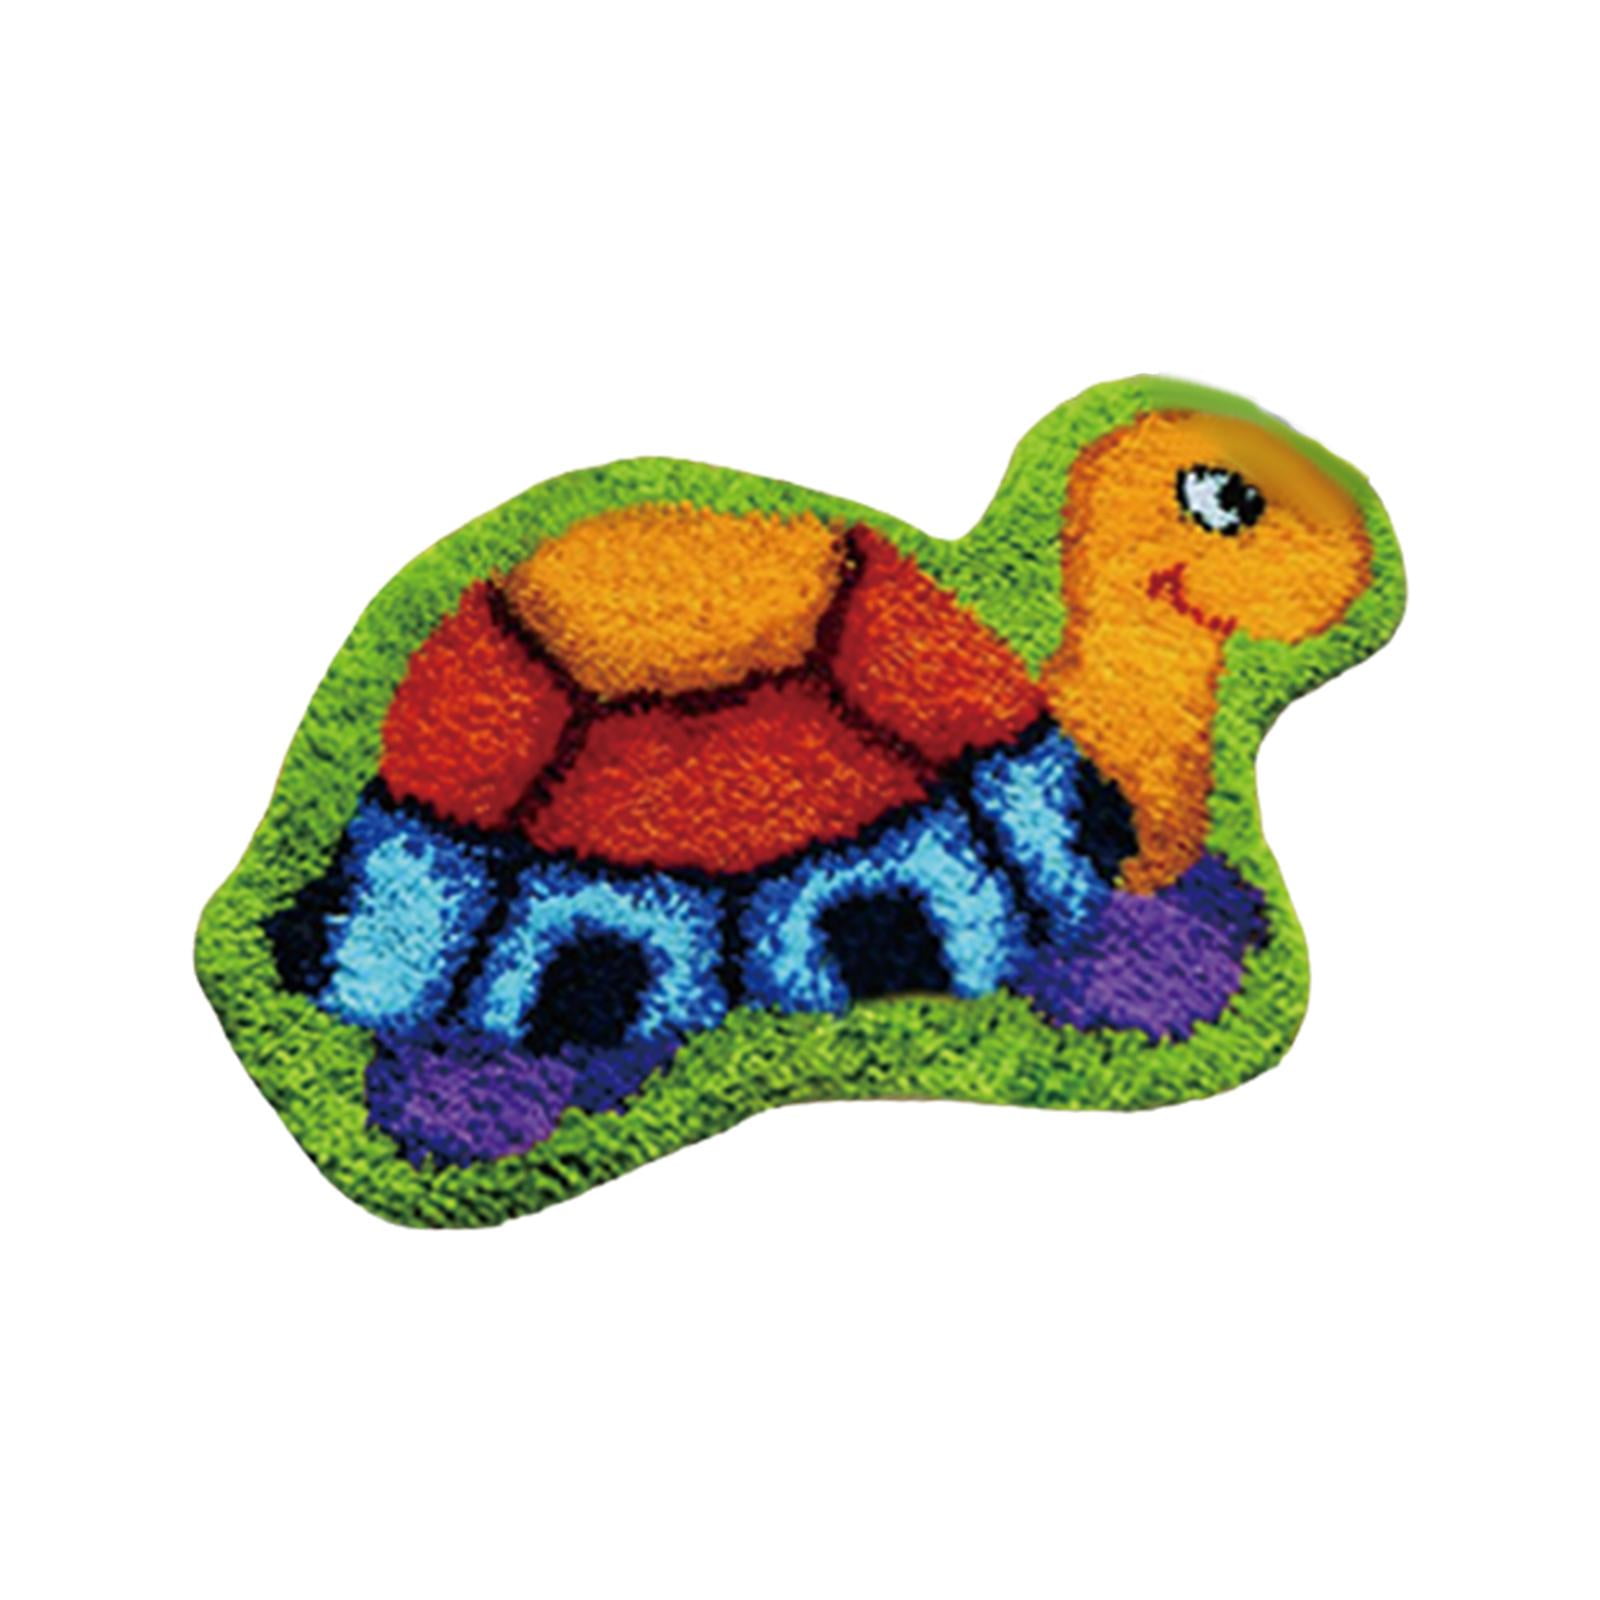 Cartoon Animal Latch Hook Rug Kits for Adults Kids ,DIY Crochet Yarn Rugs  Hooking Craft with Preprinted Pattern Design 